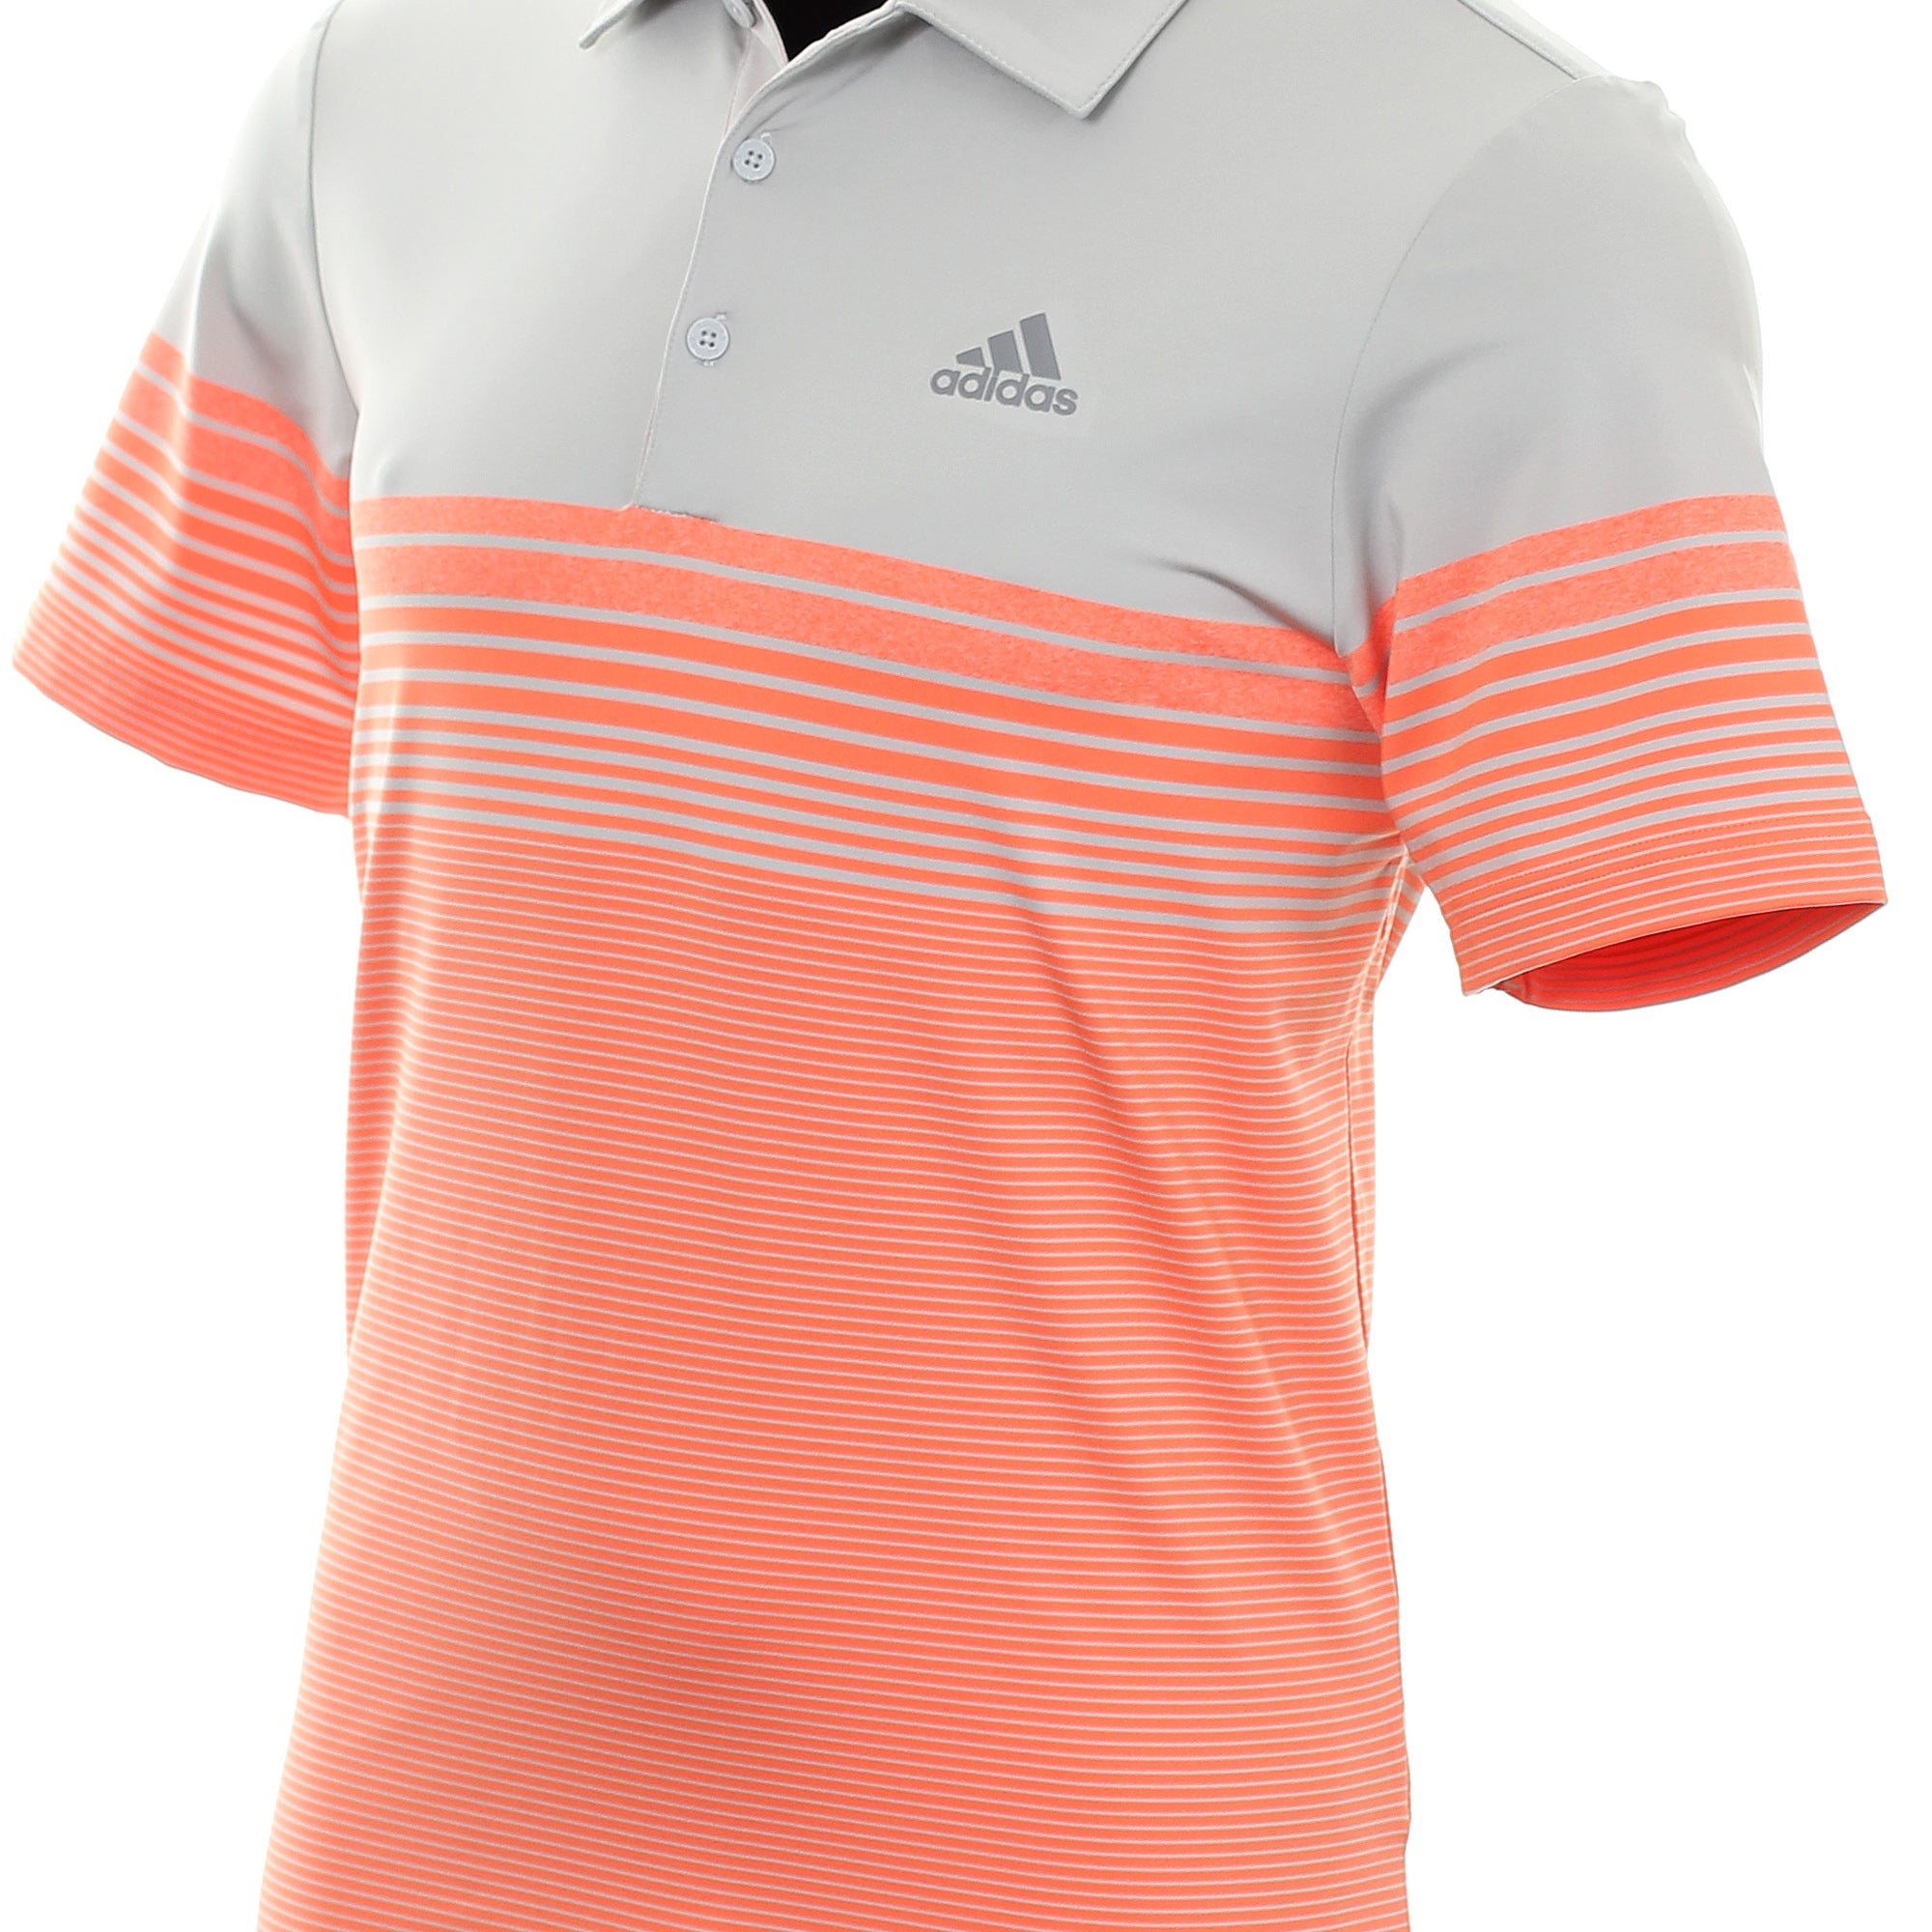 orange adidas golf shirt